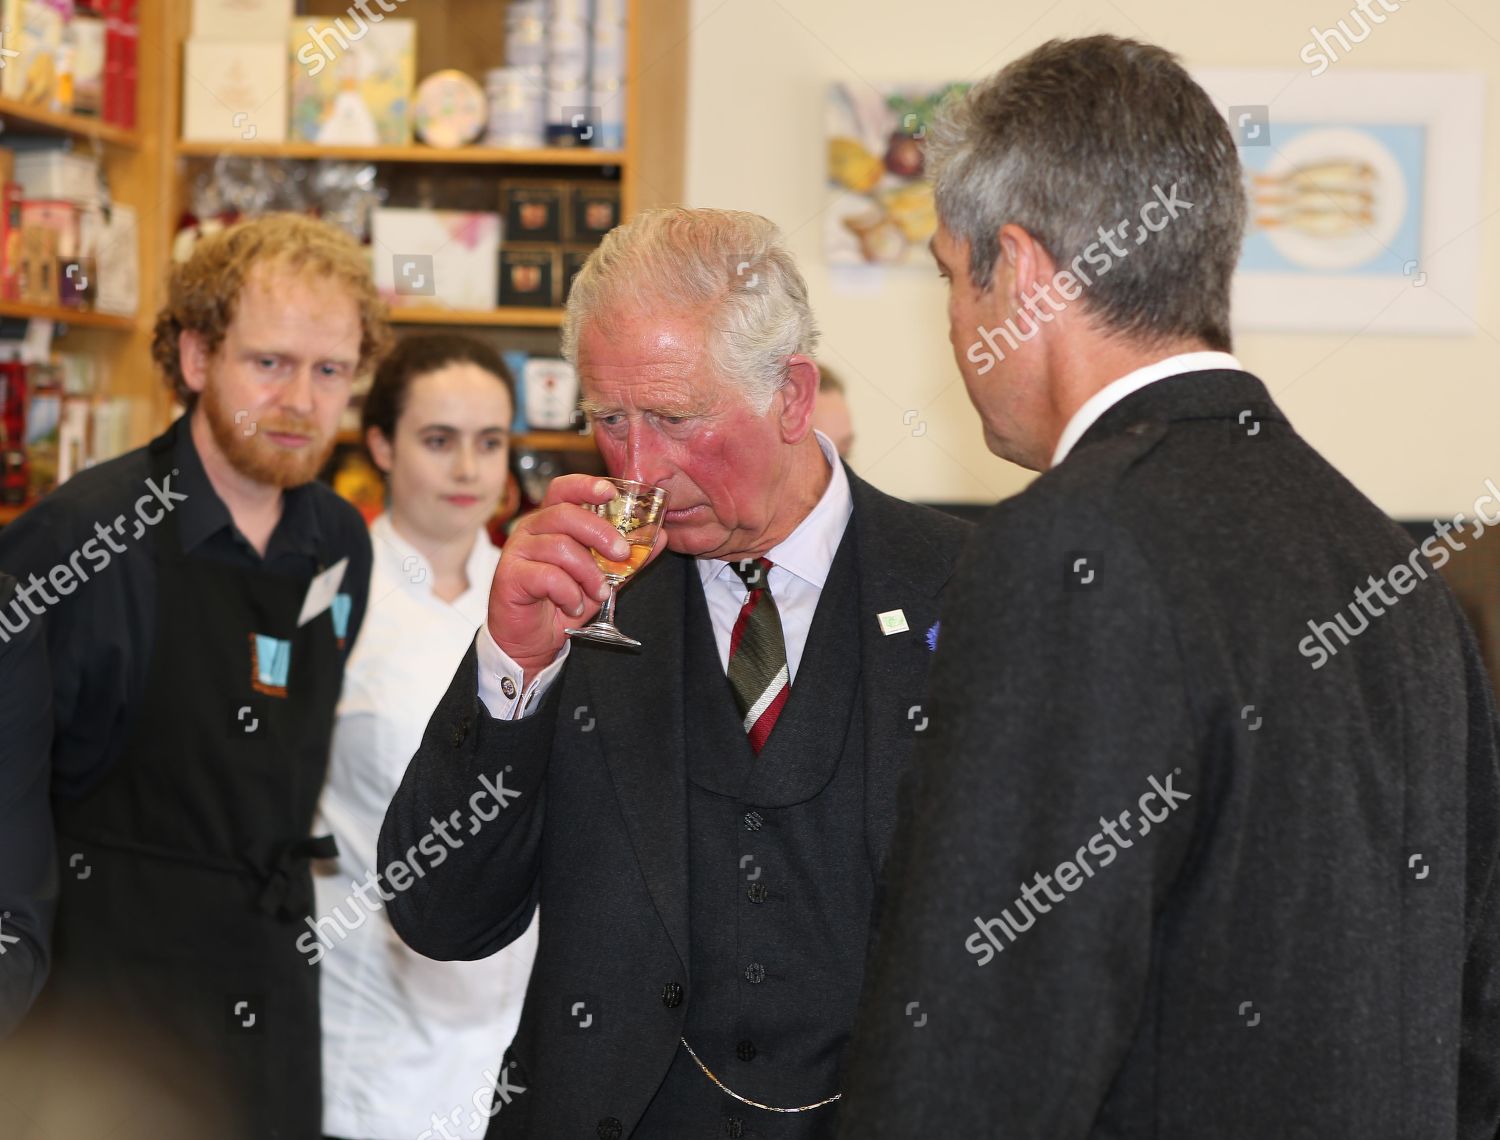 prince-charles-visits-beauly-scotland-uk-shutterstock-editorial-10355332p.jpg